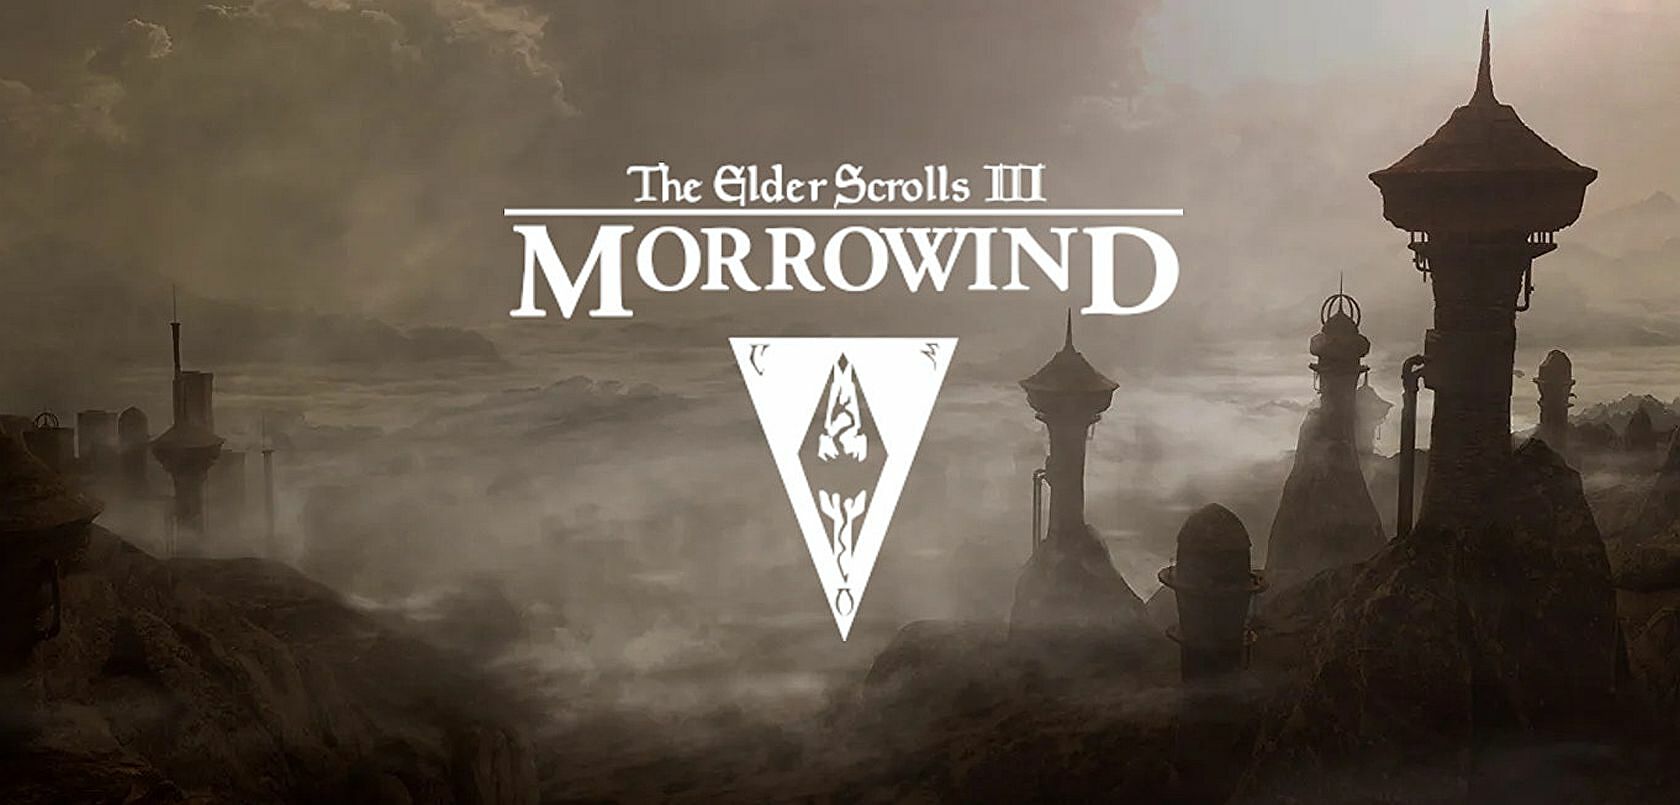 The Elder Scrolls 3: Morrowind GOTY Edition headlines February’s Prime Gaming lineup